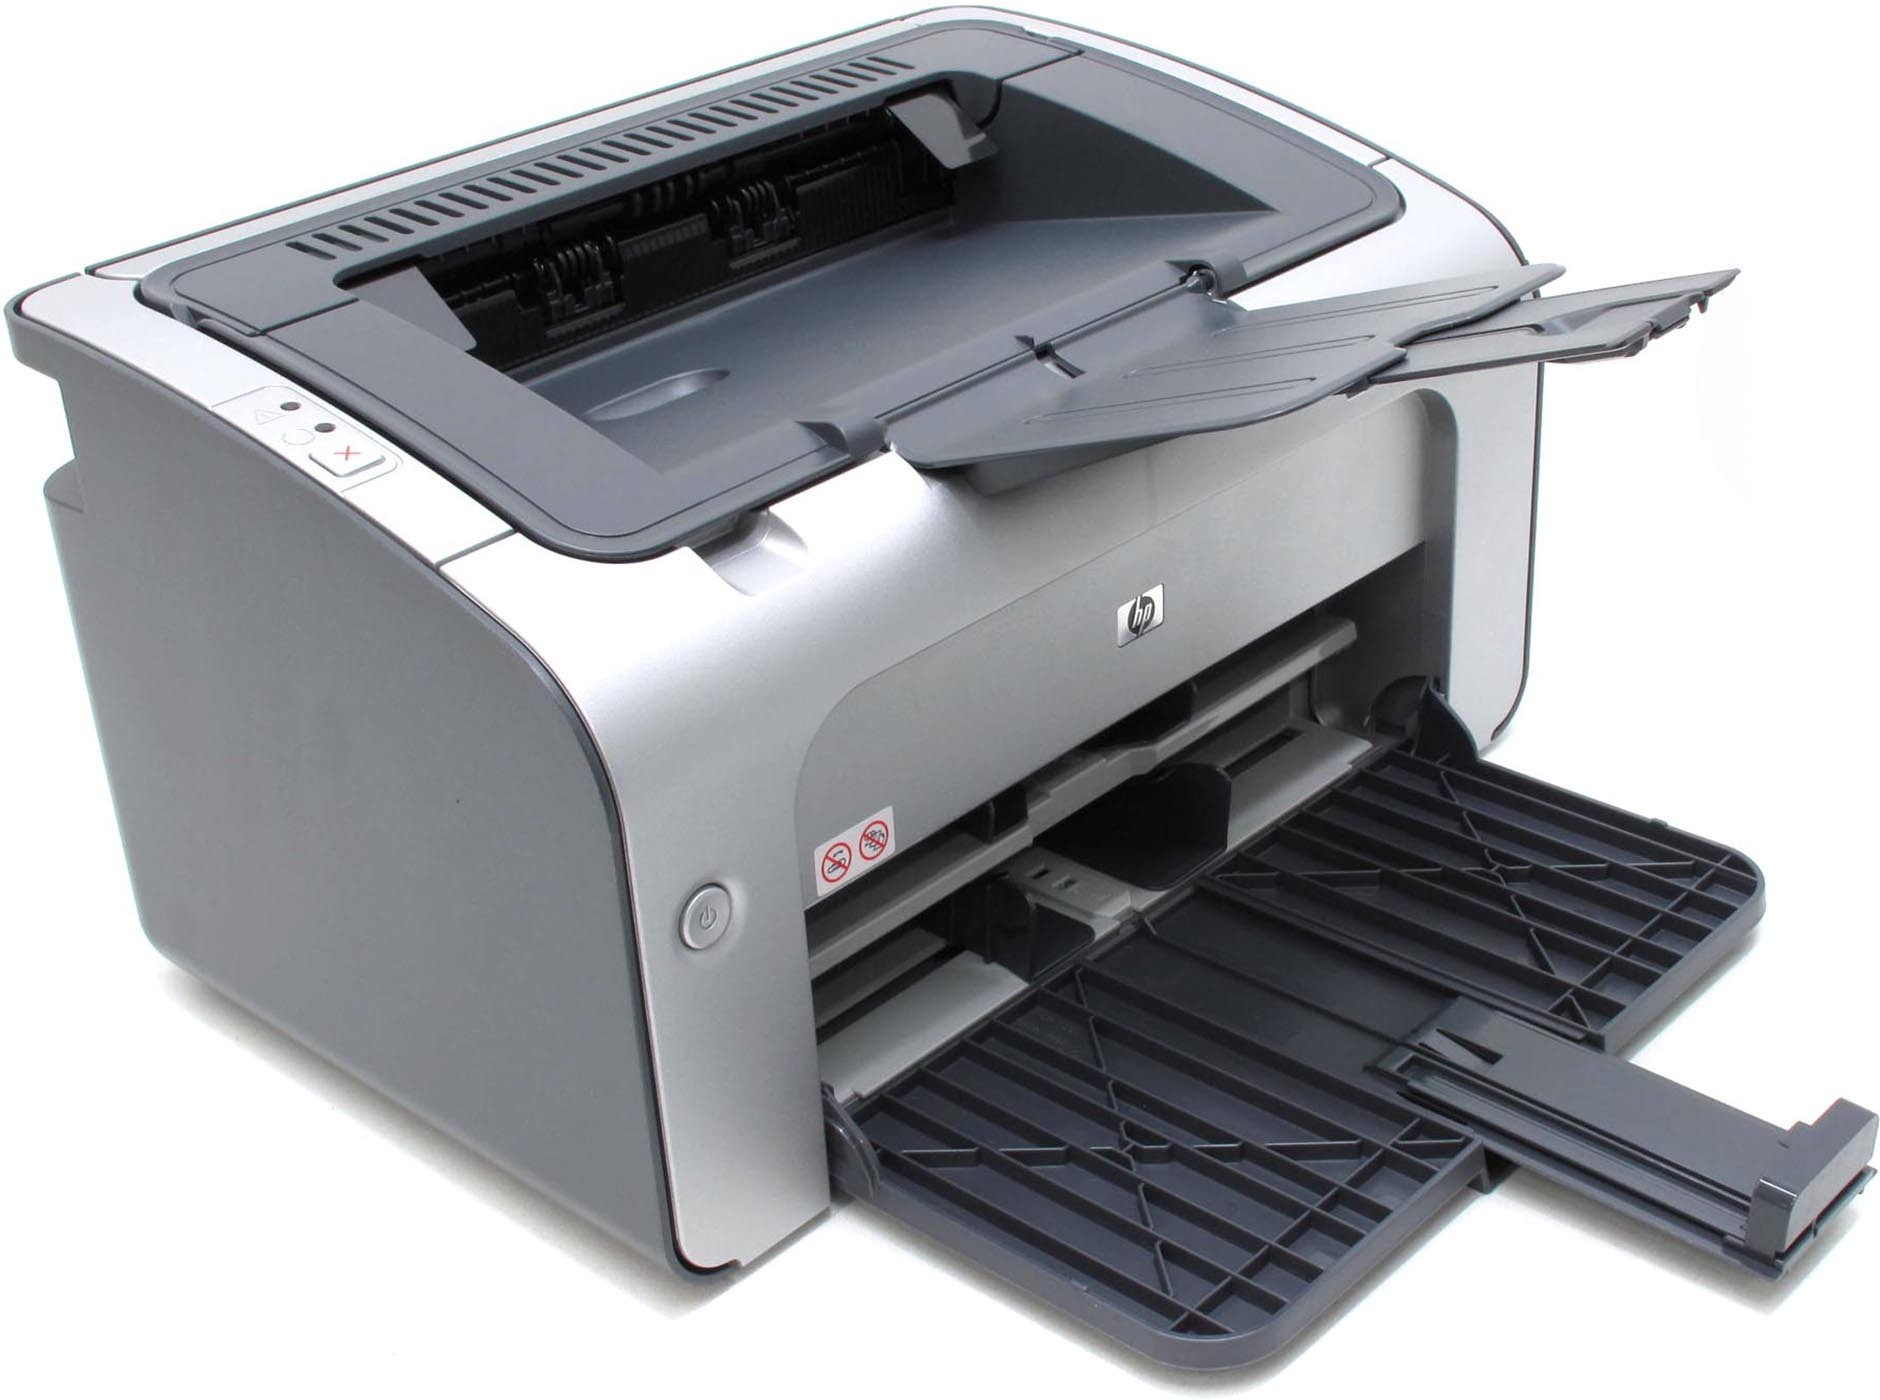 free download driver printer hp laserjet p1006 for mac